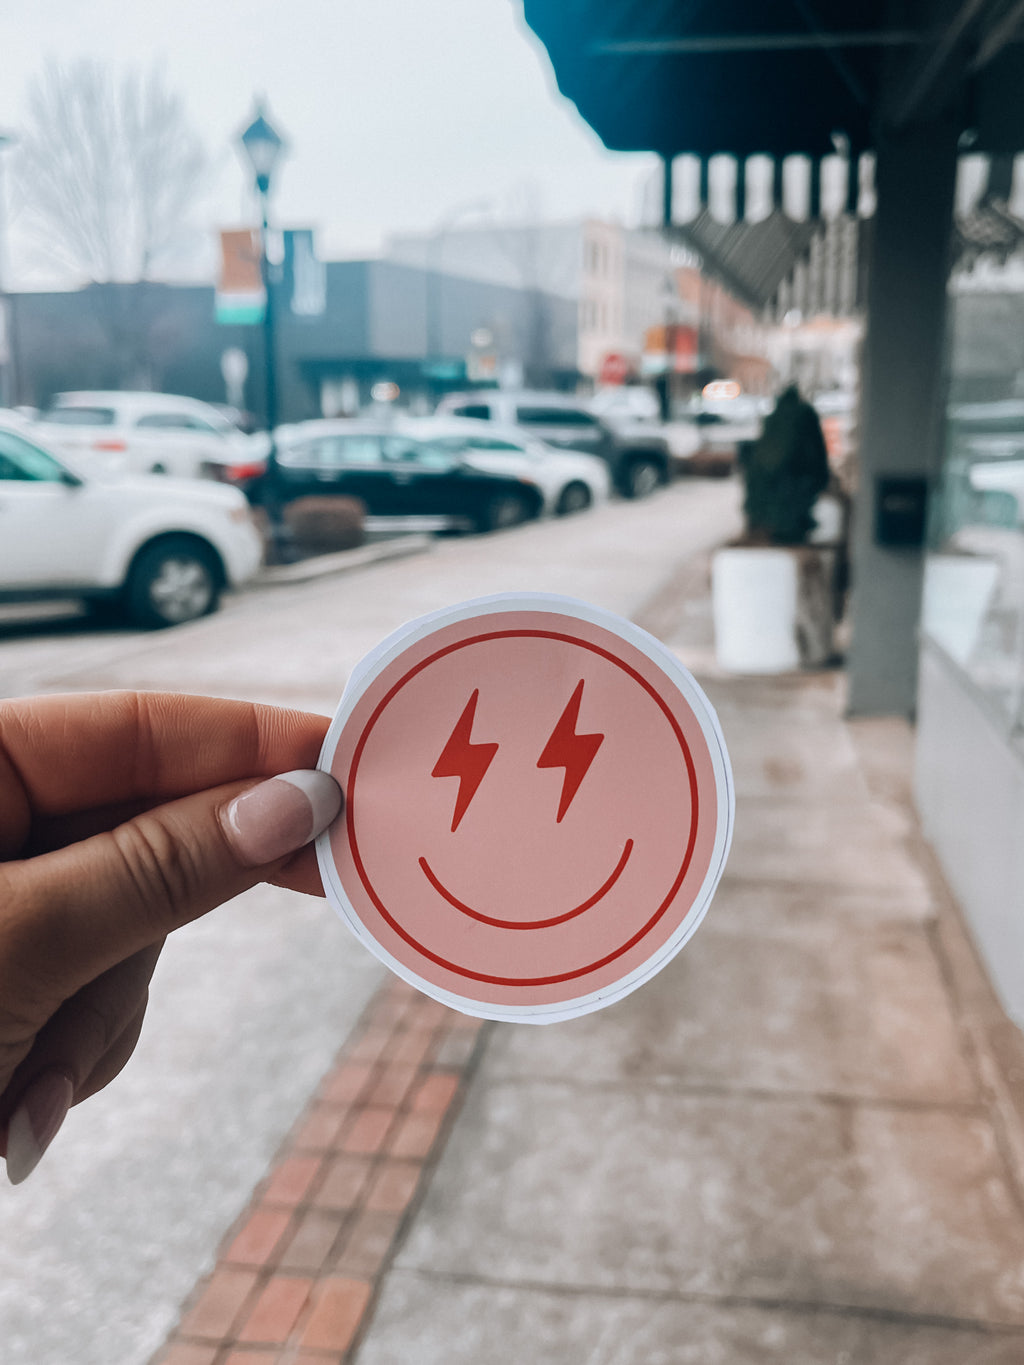 Lightning Bolt Smile Face Sticker Decal